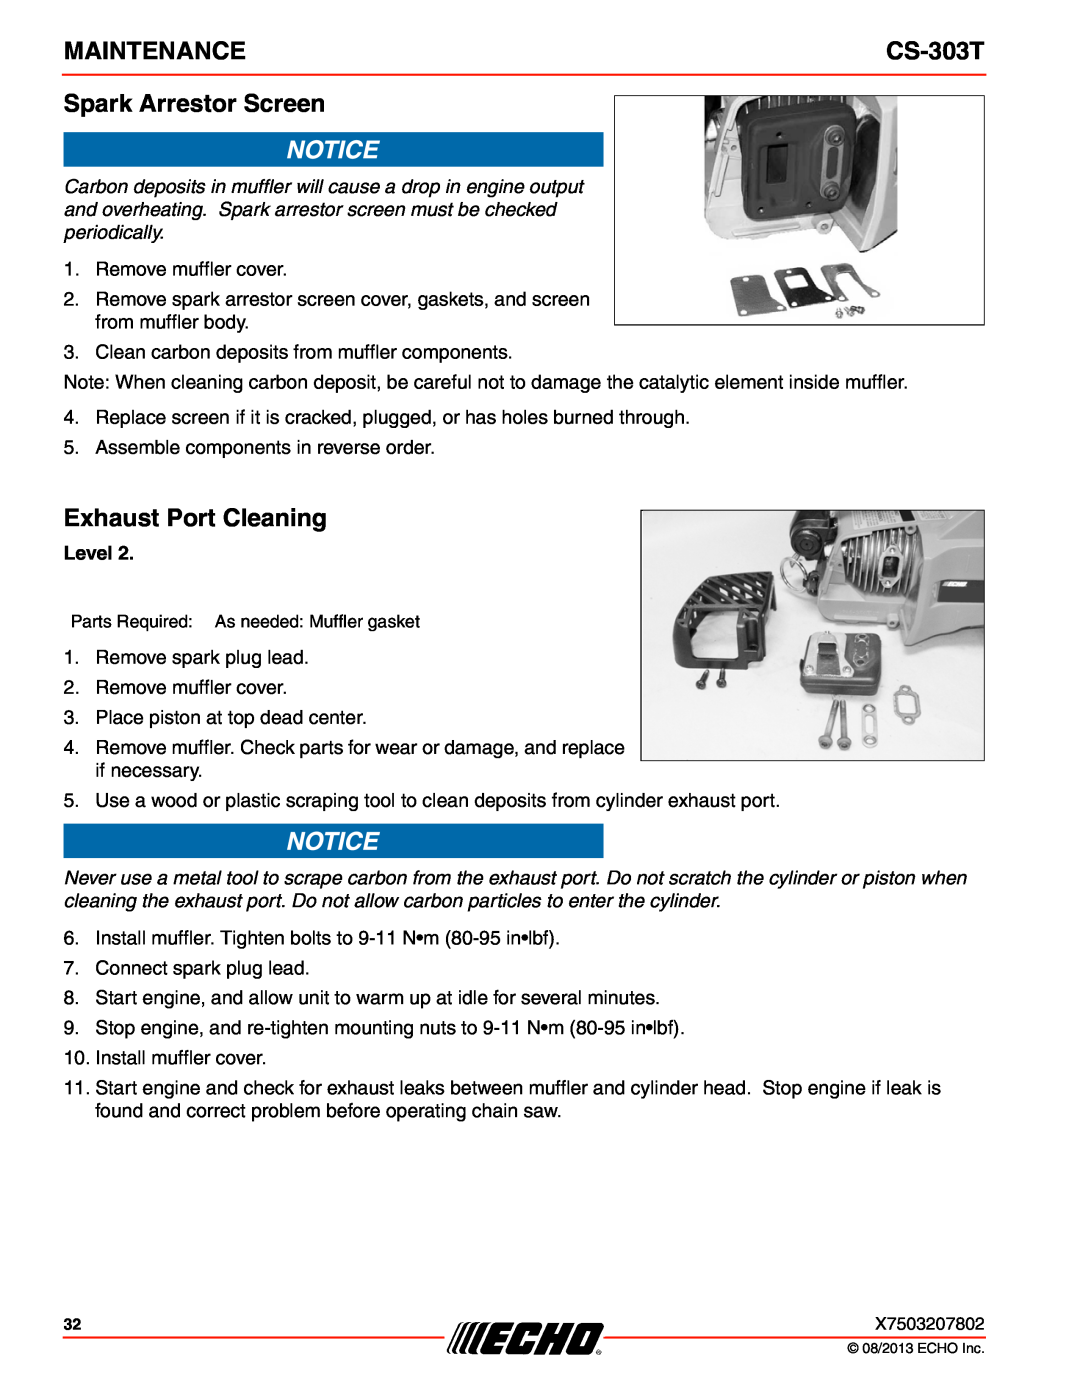 Echo CS-303T instruction manual Spark Arrestor Screen, Exhaust Port Cleaning, Level, Maintenance 